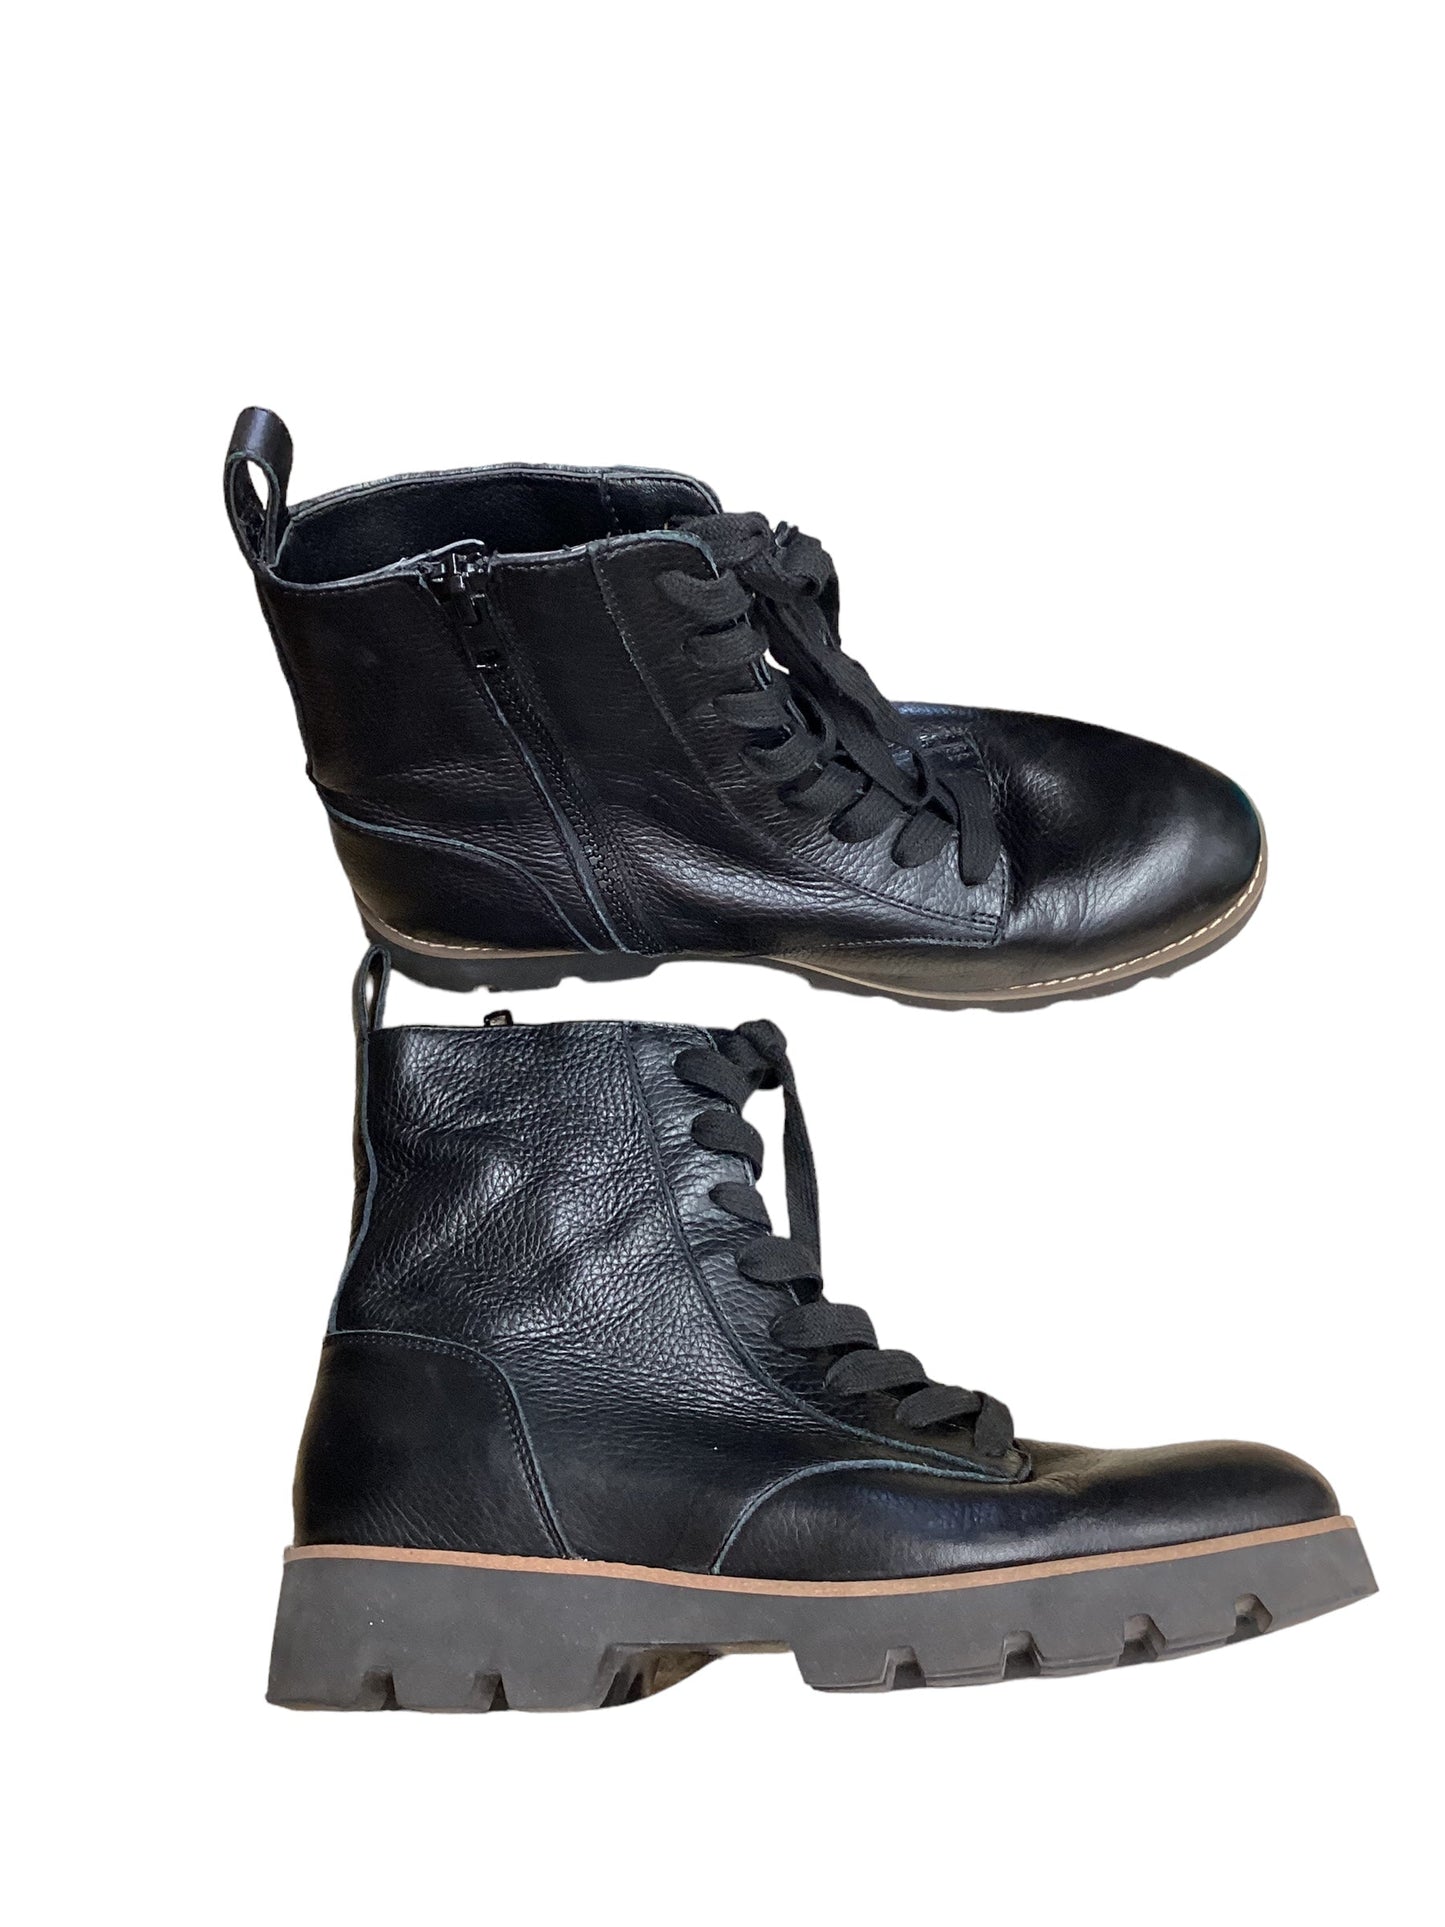 Black Boots Ankle Flats Vionic, Size 6.5